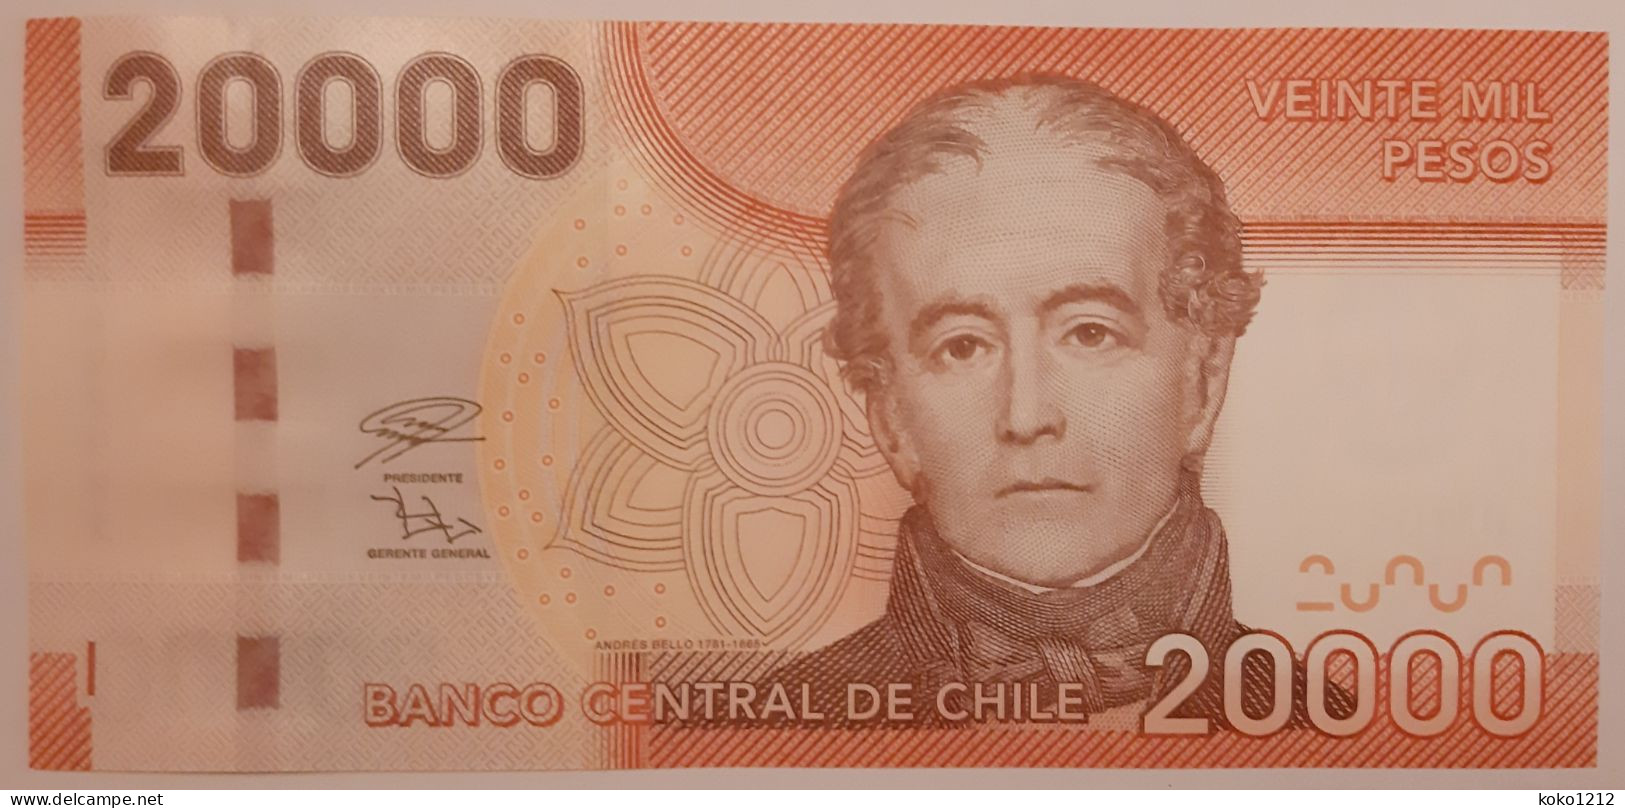 Chile 20000 Pesos 2020 P165 UNC - Chili